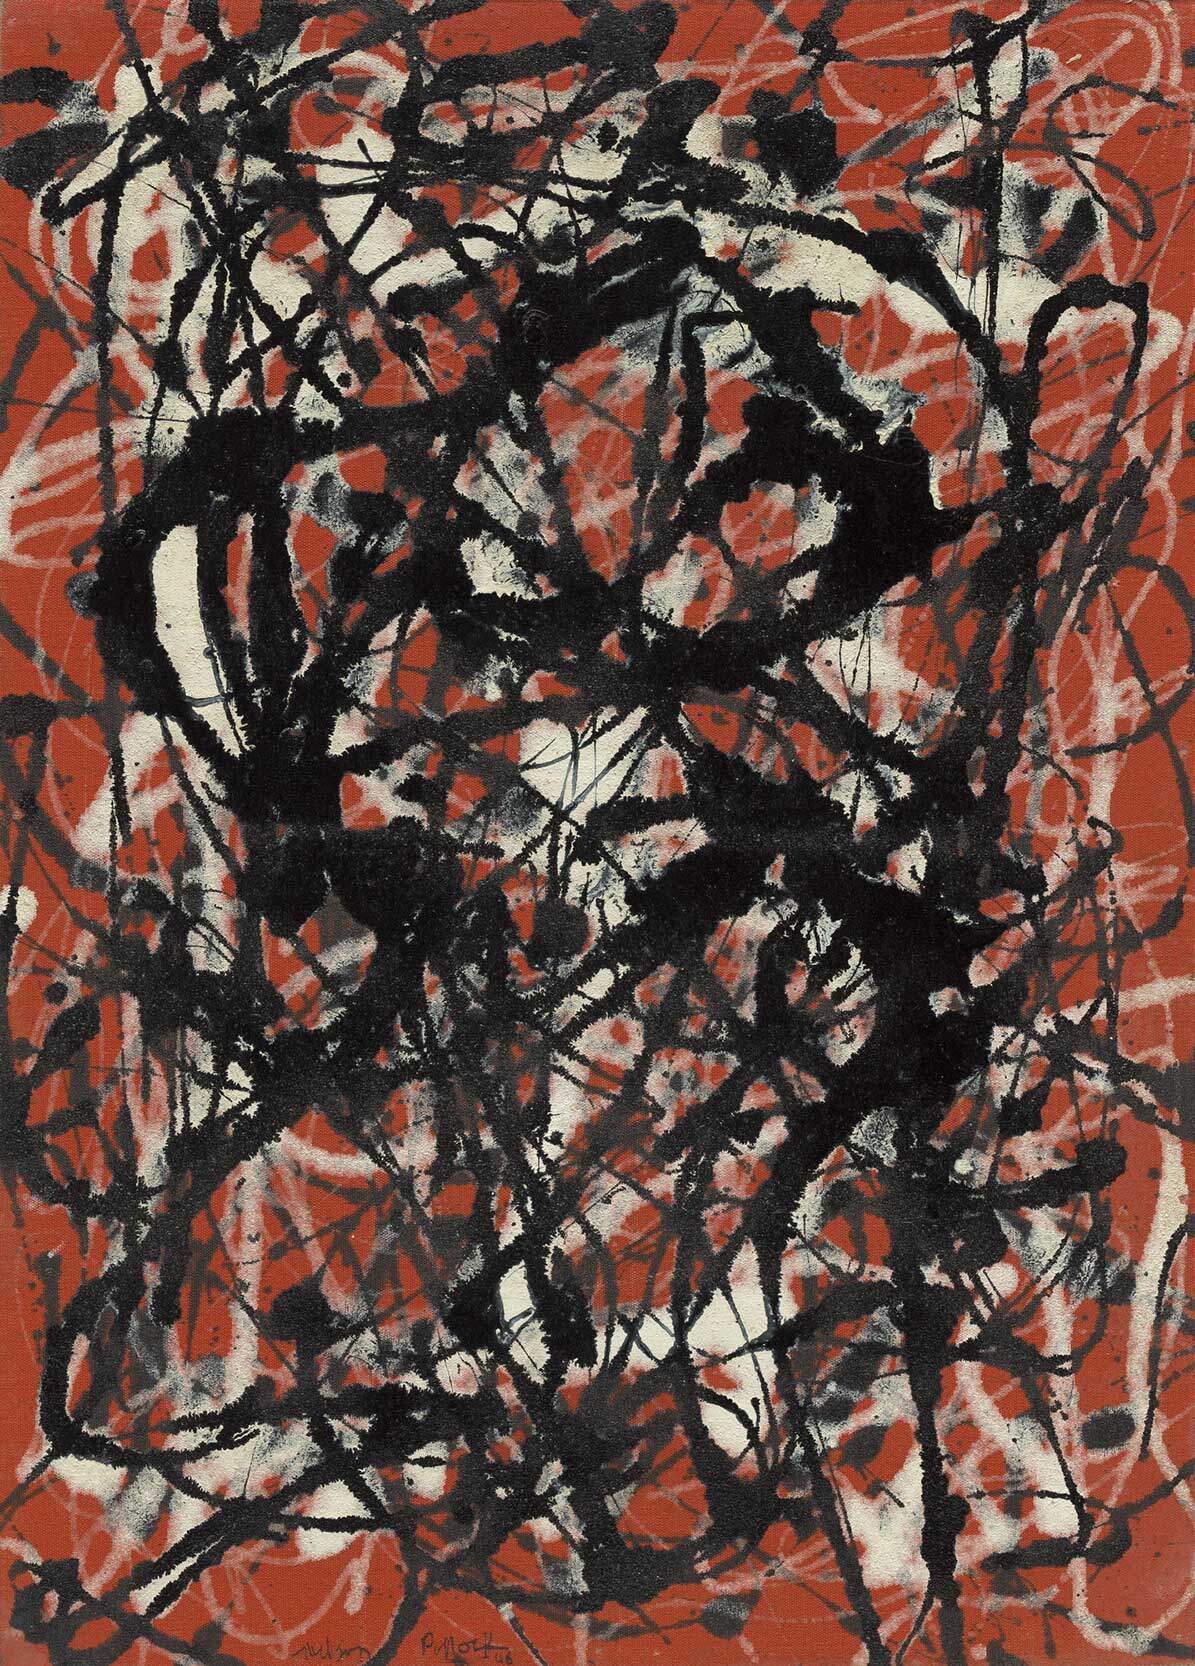 Forma libre, de Jackson Pollock